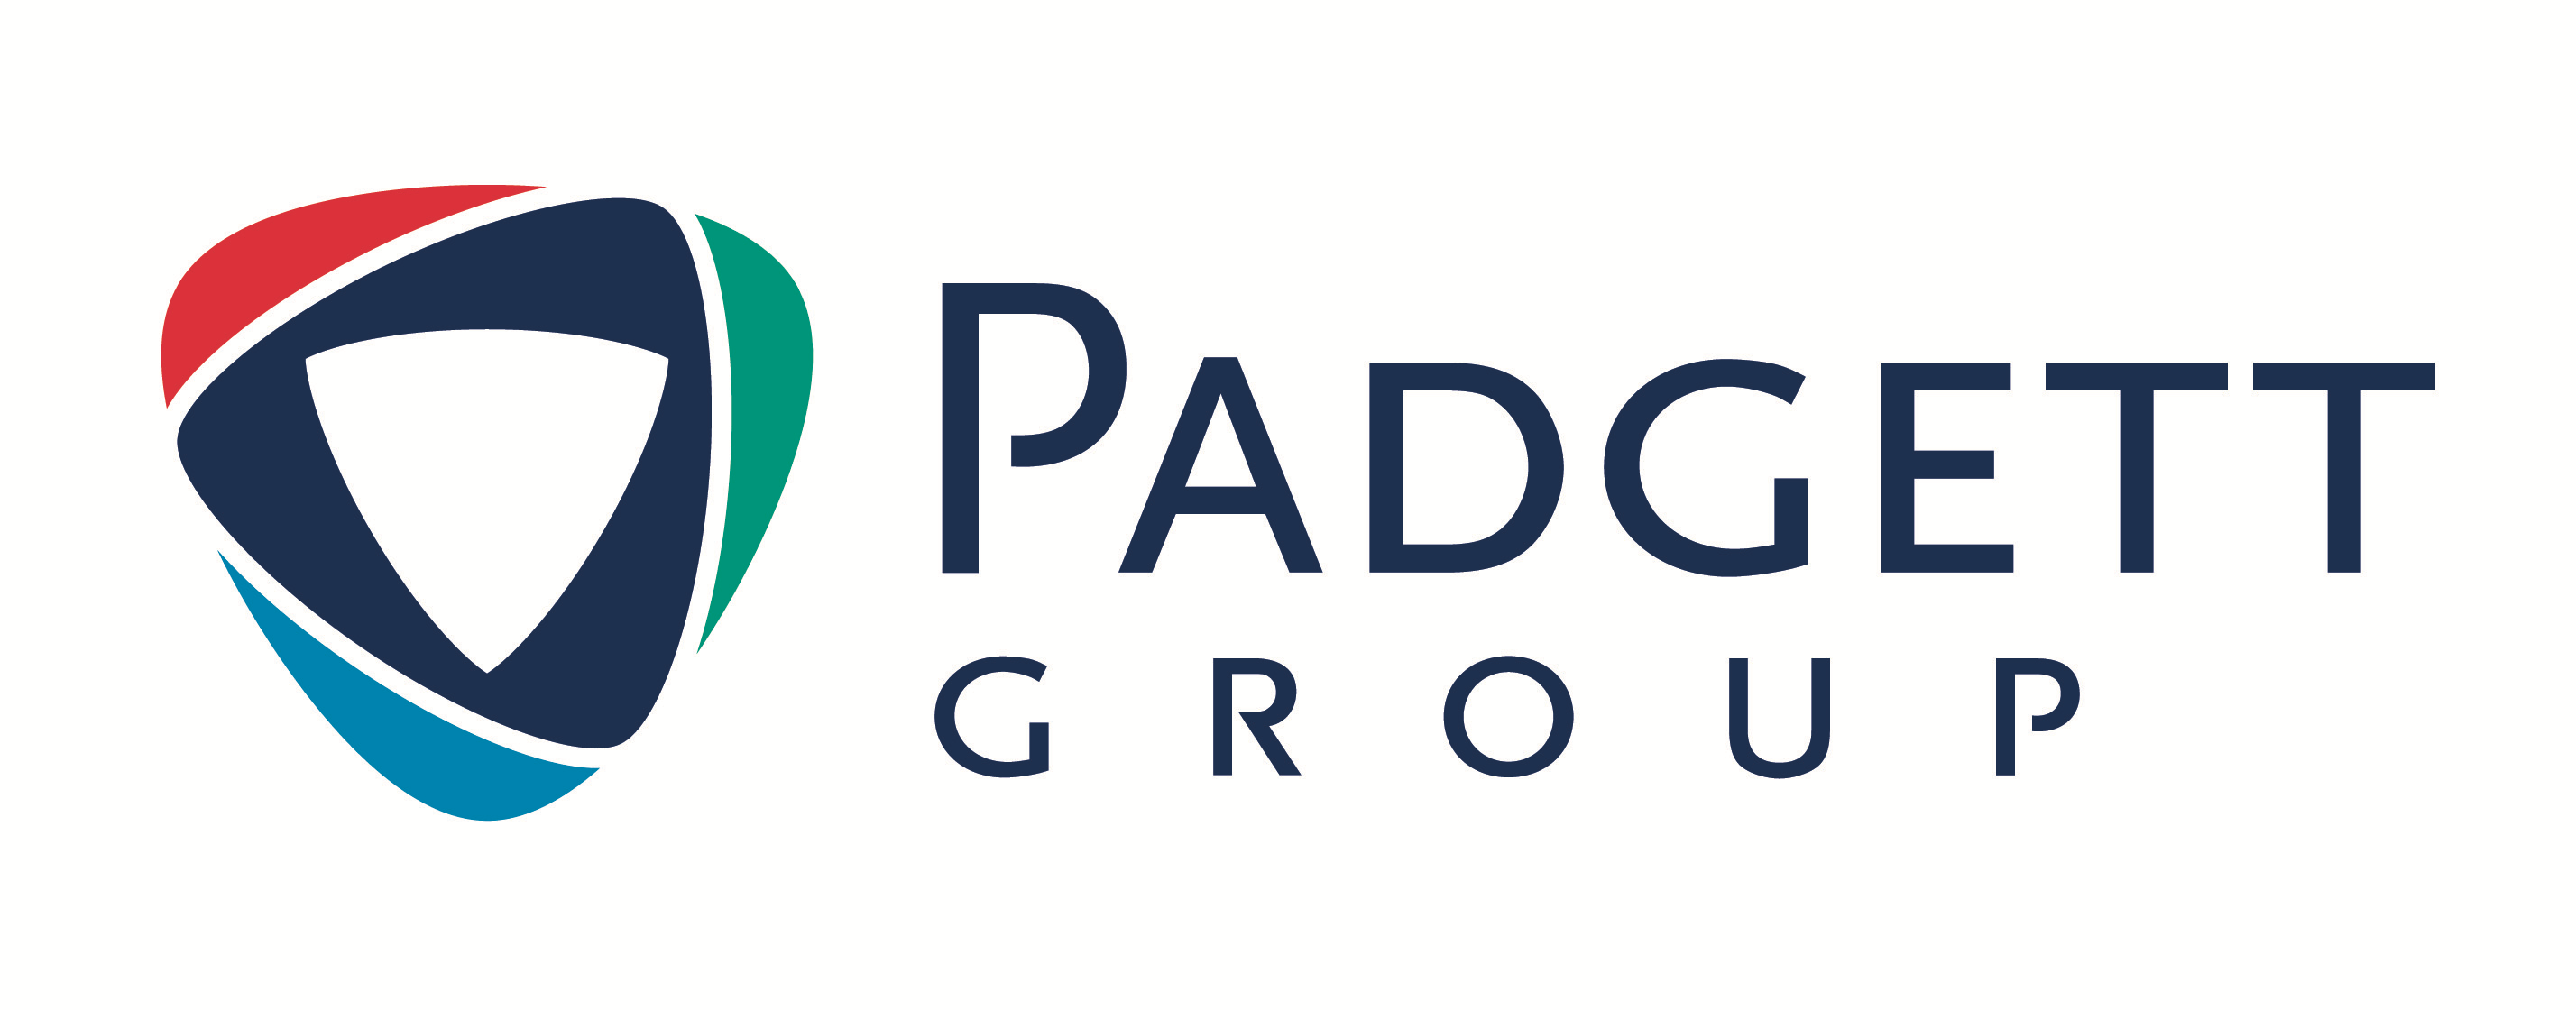 Padgett Group logo